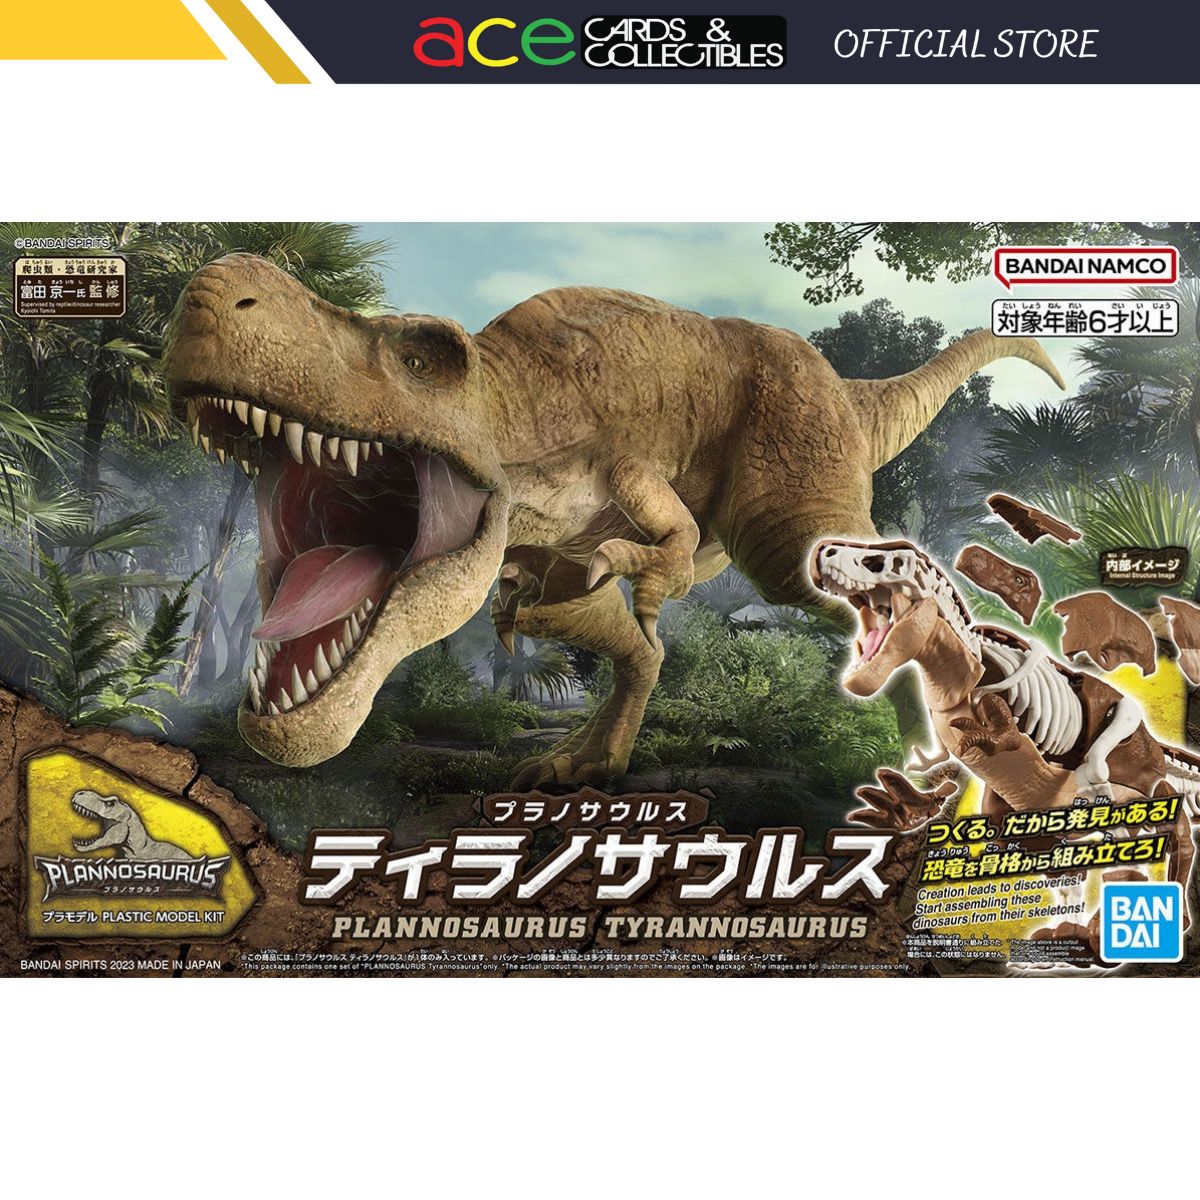 New Dinosaur Plastic Model Kit Brand "Tyrannosaurus"-Bandai-Ace Cards & Collectibles